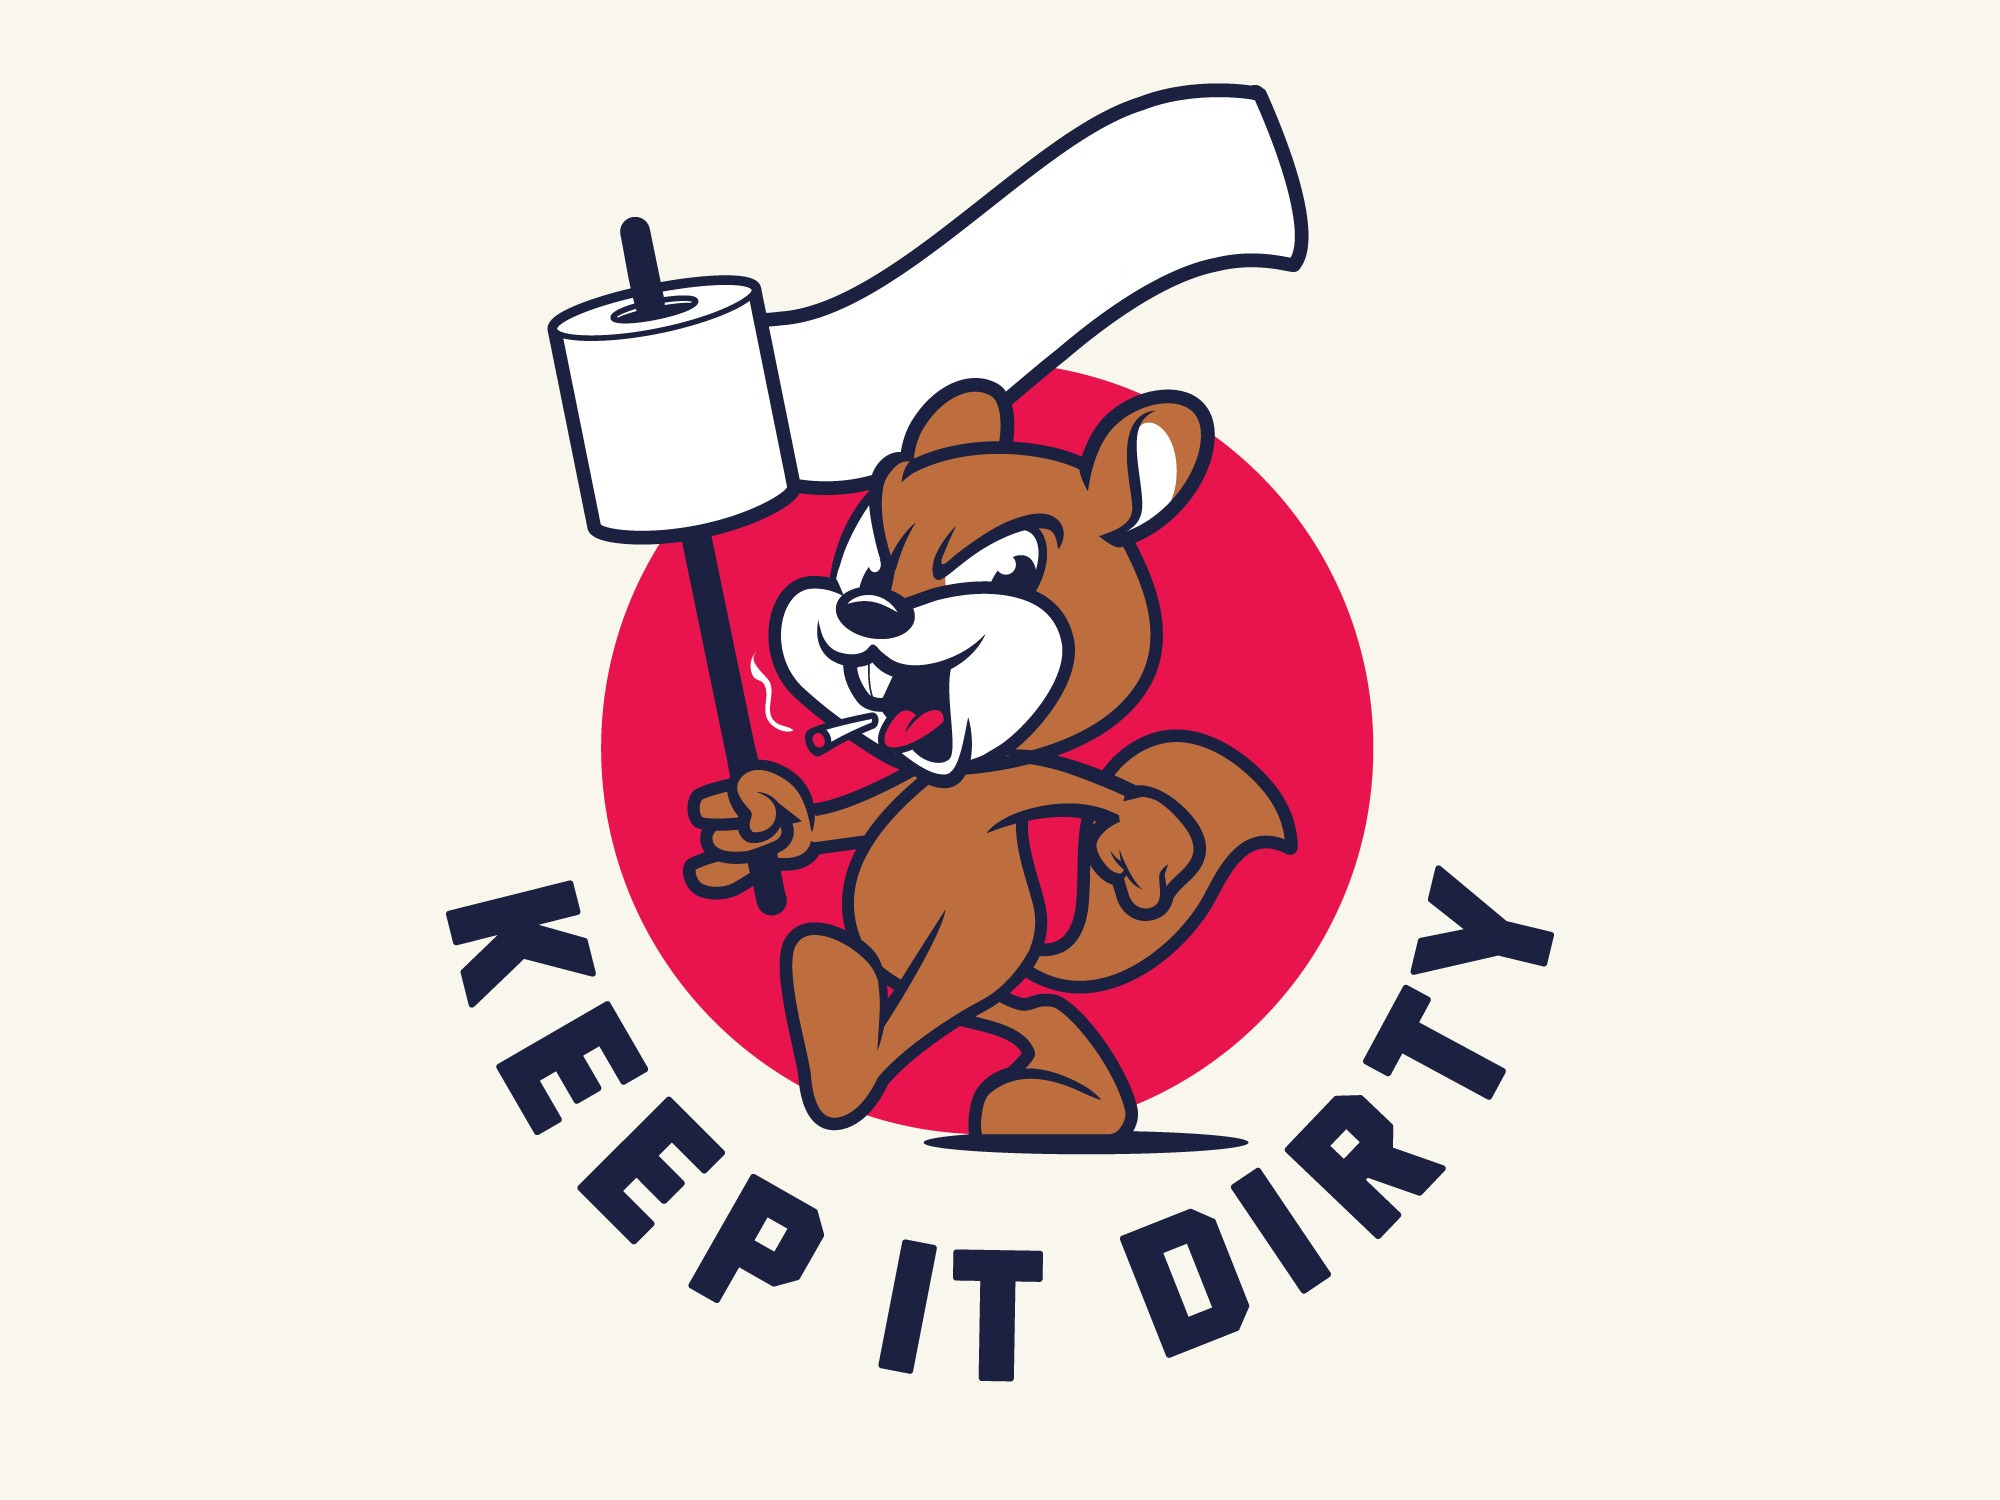 Keep it Dirty